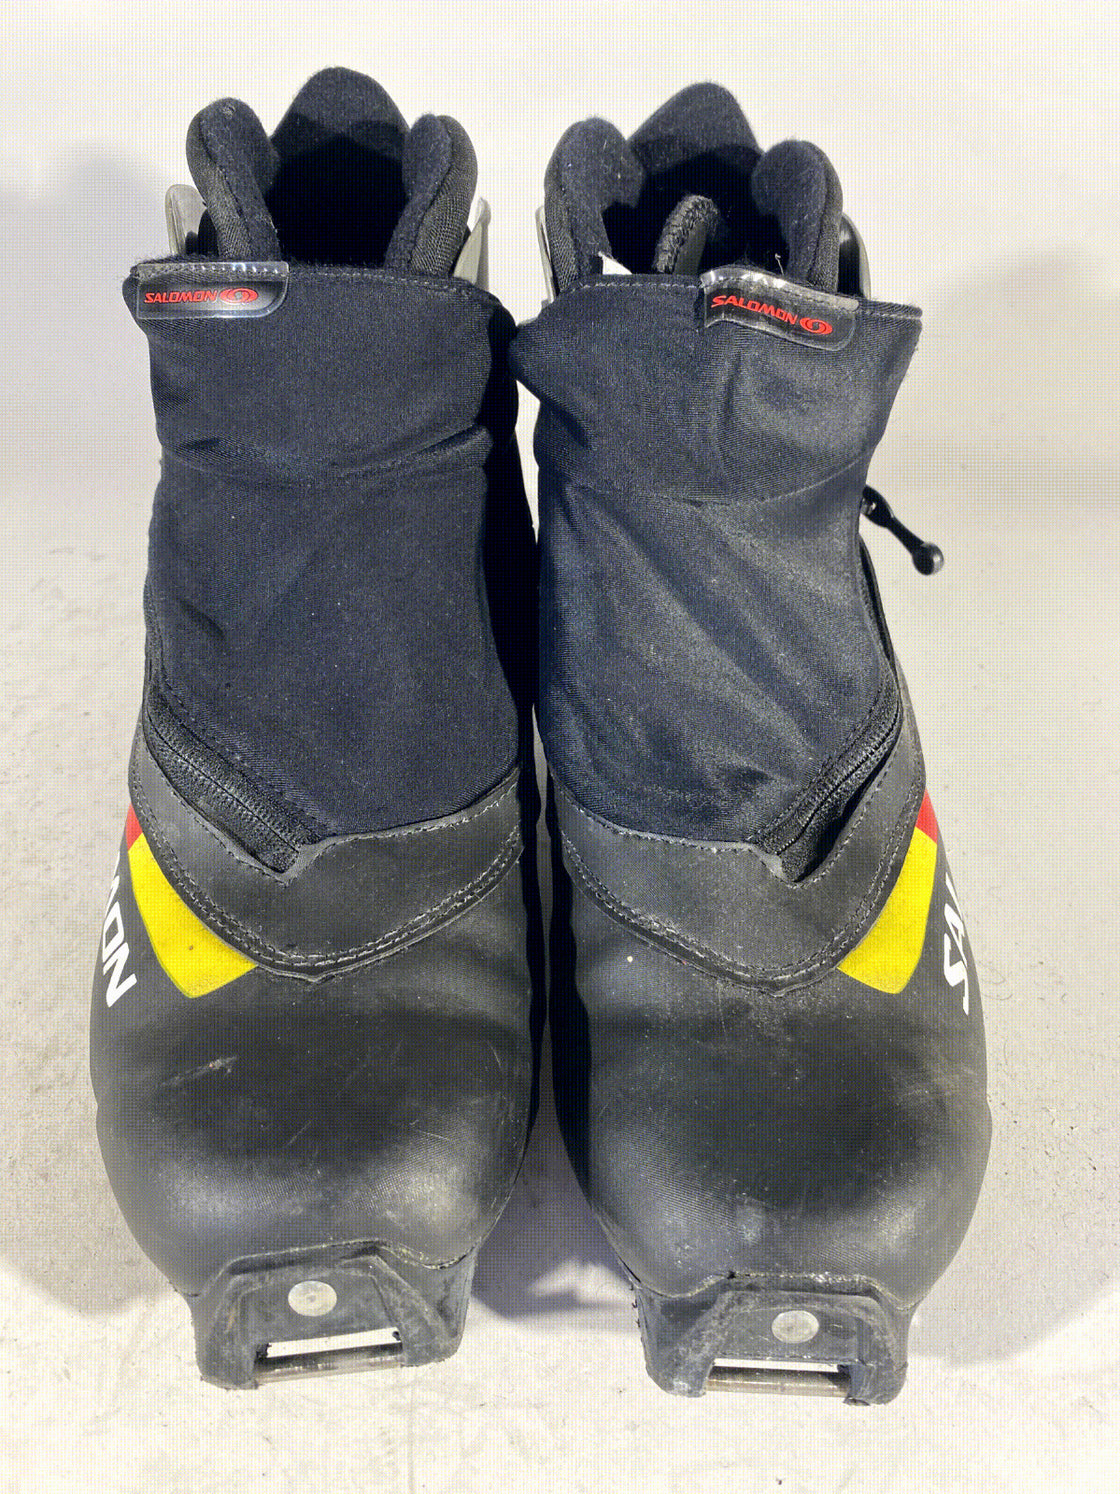 Salomon Classic Nordic Cross Country Ski Boots Size EU44 US10 SNS Profil